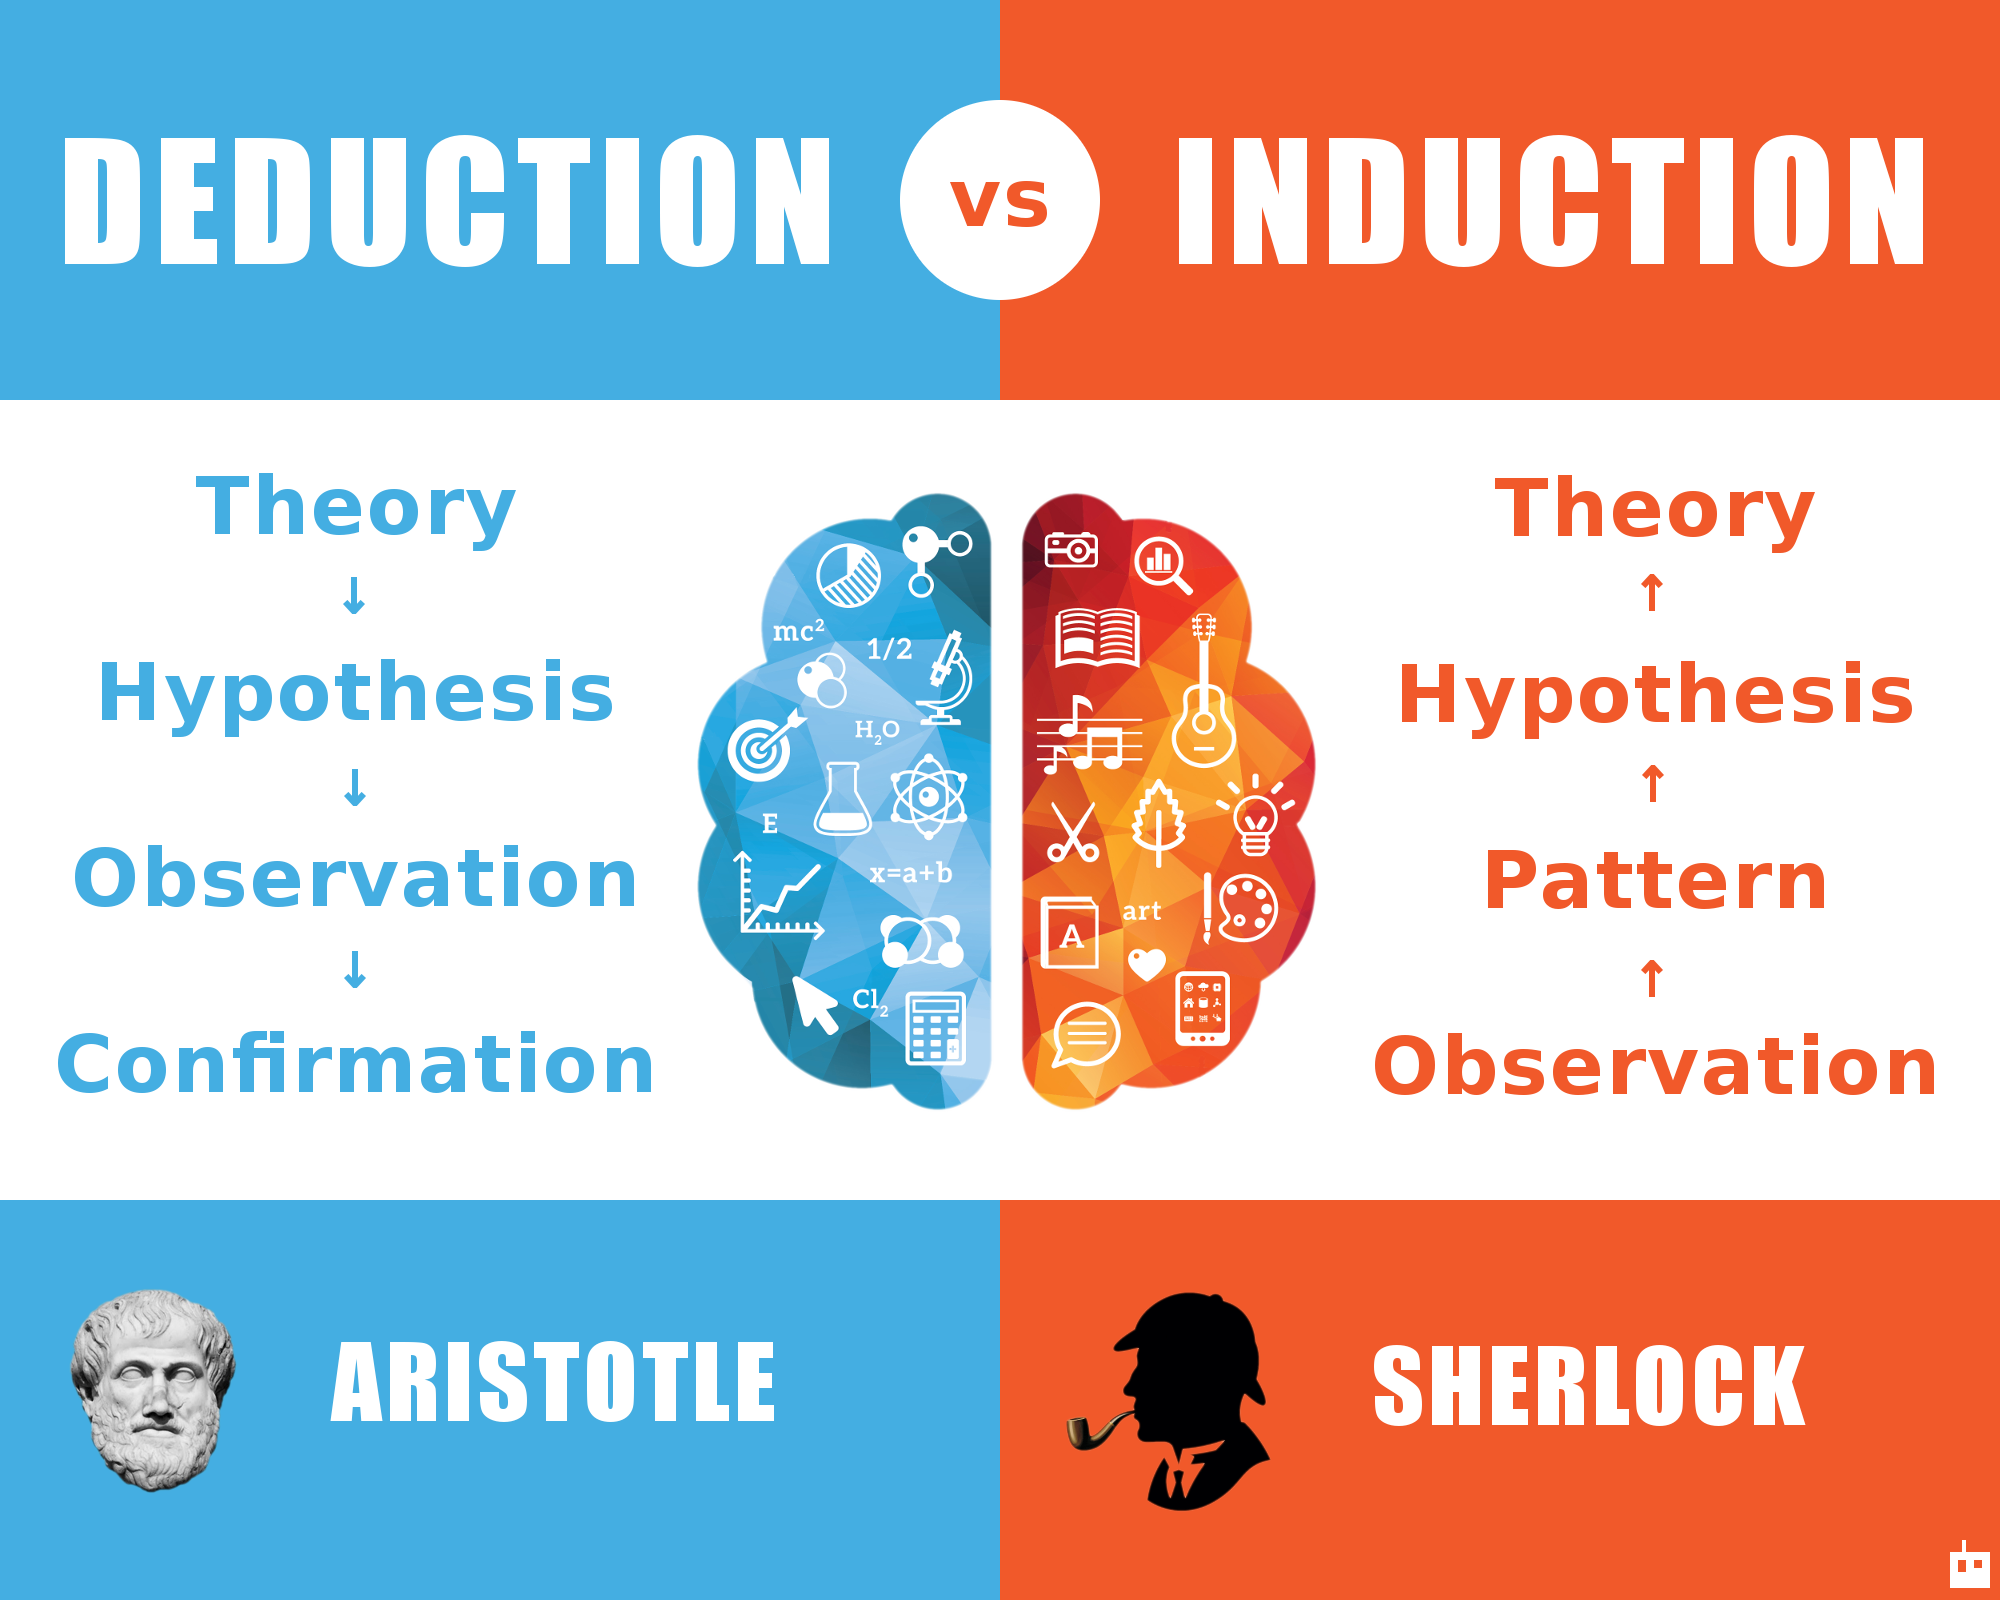 Science of deduction, deductive inductive reasoning, sherlock holmes.